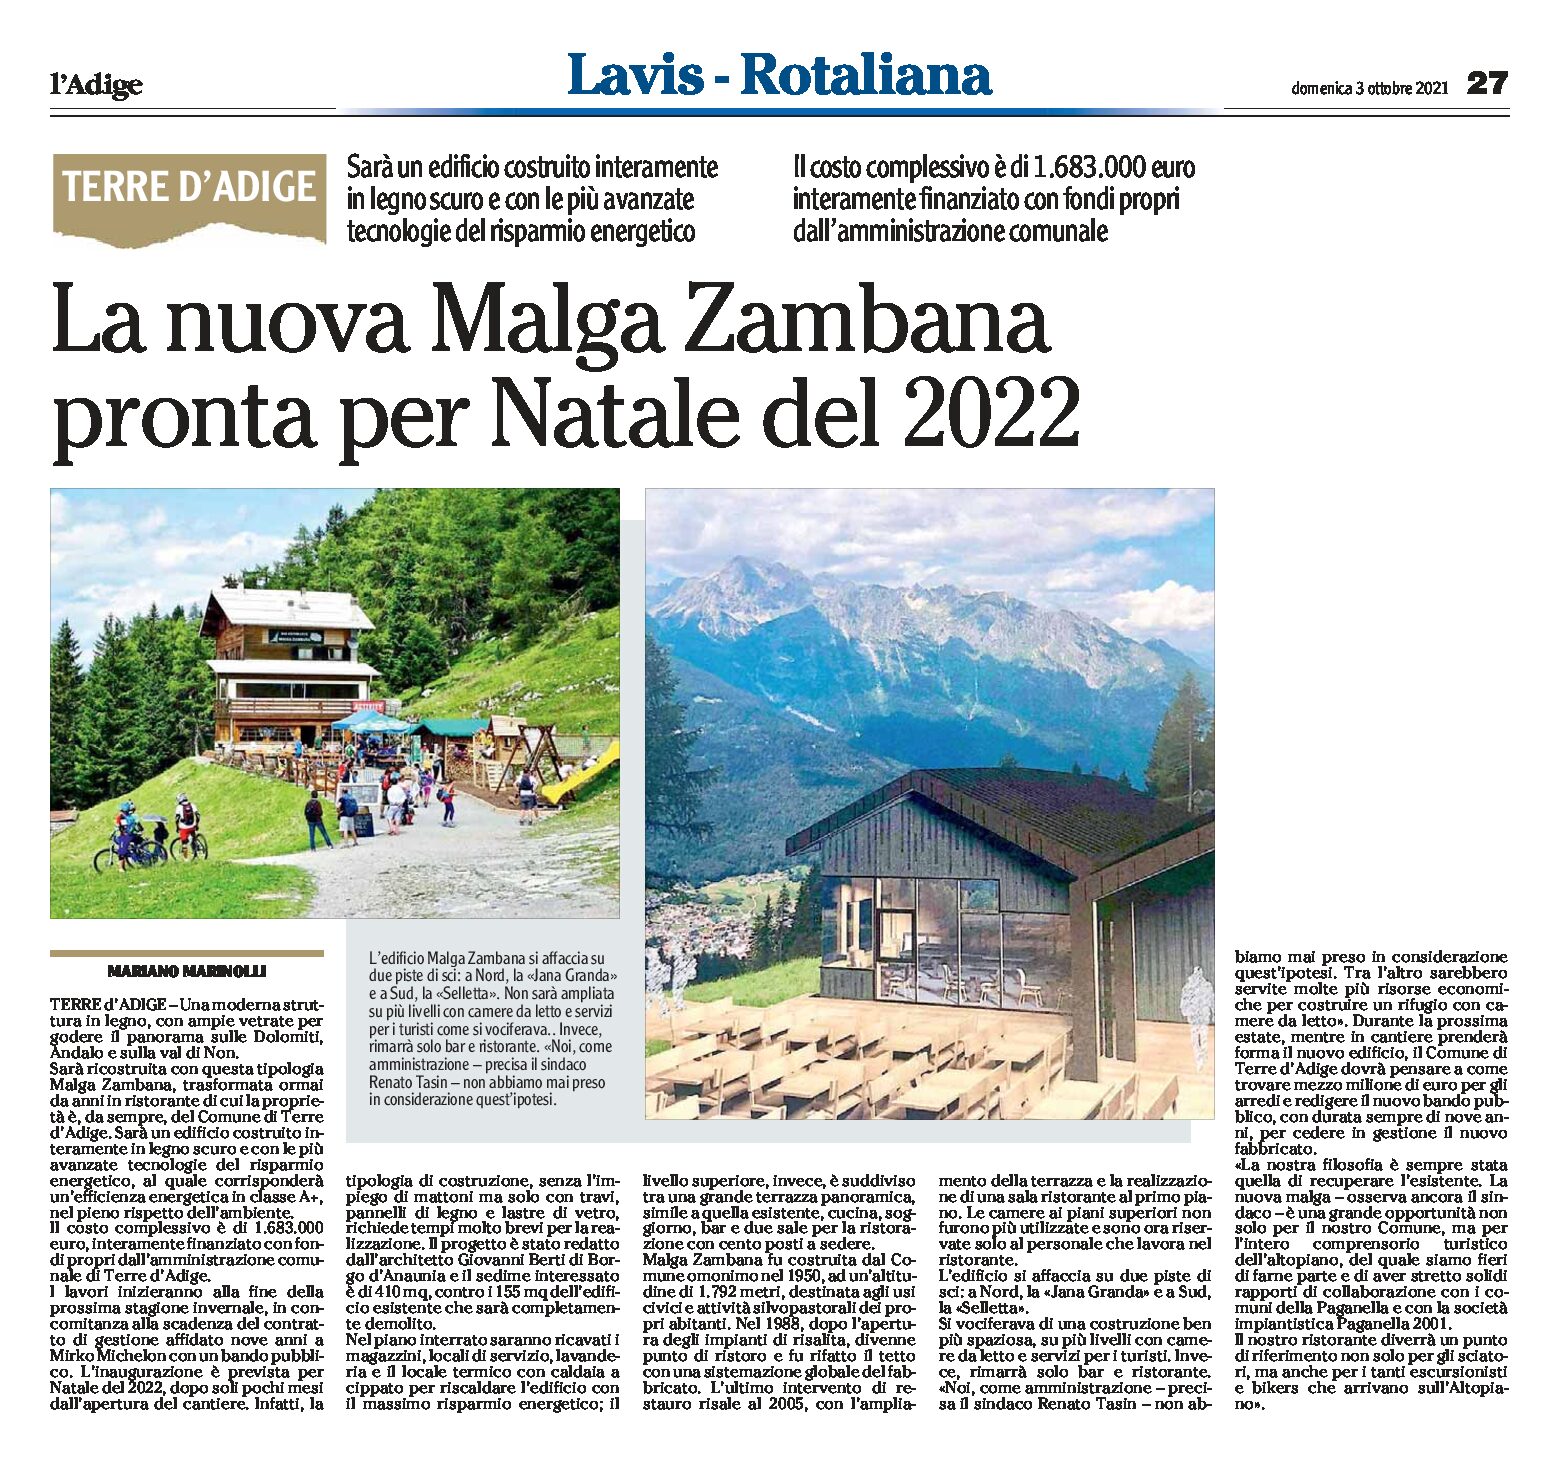 Terre d’Adige: la nuova Malga Zambana pronta per Natale 2022